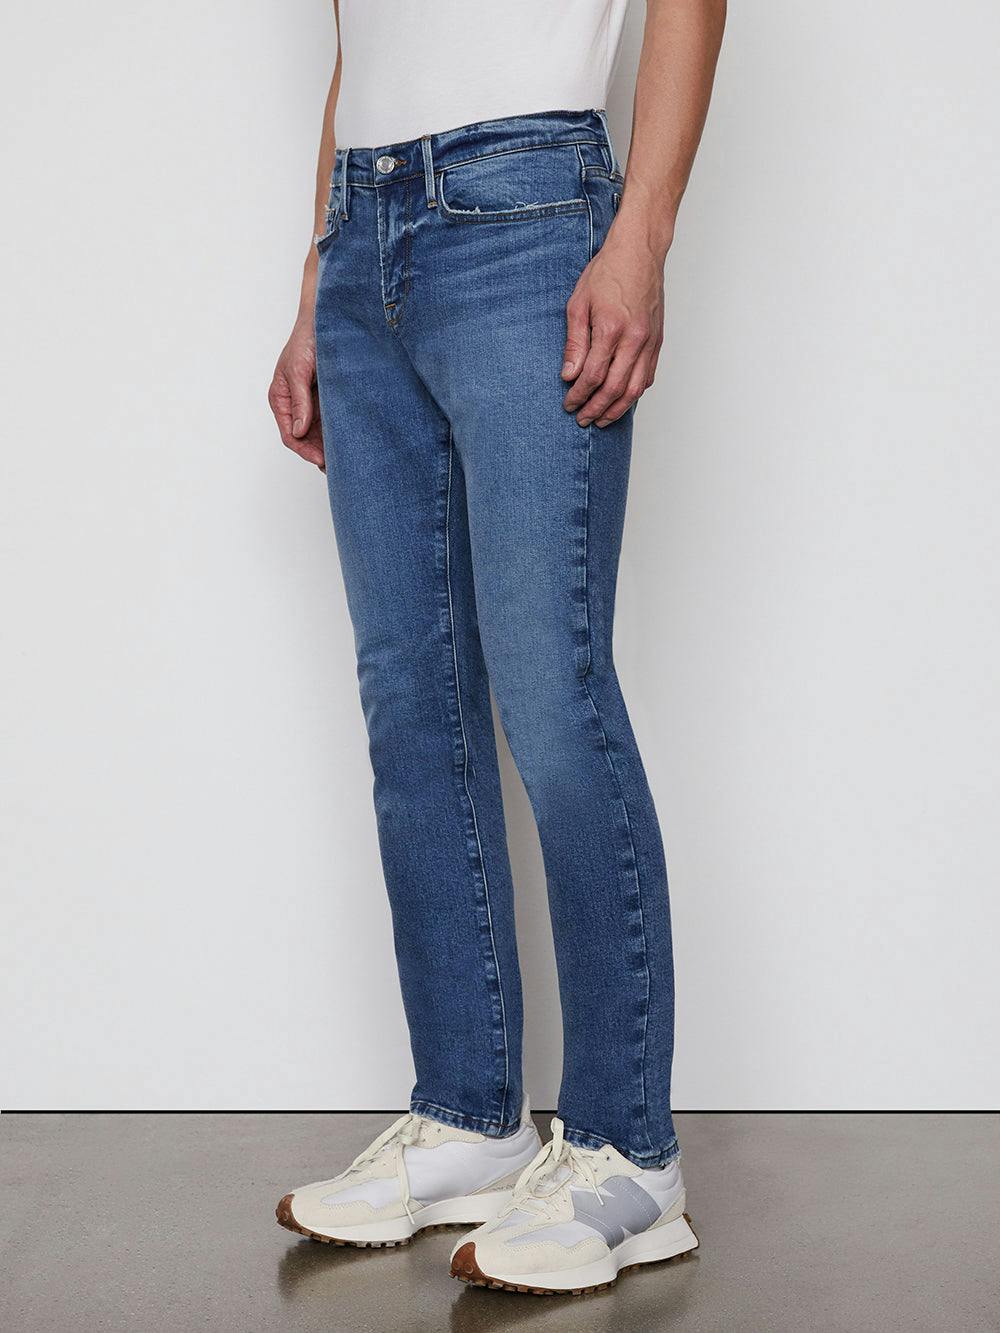 jeans side view alt:hover